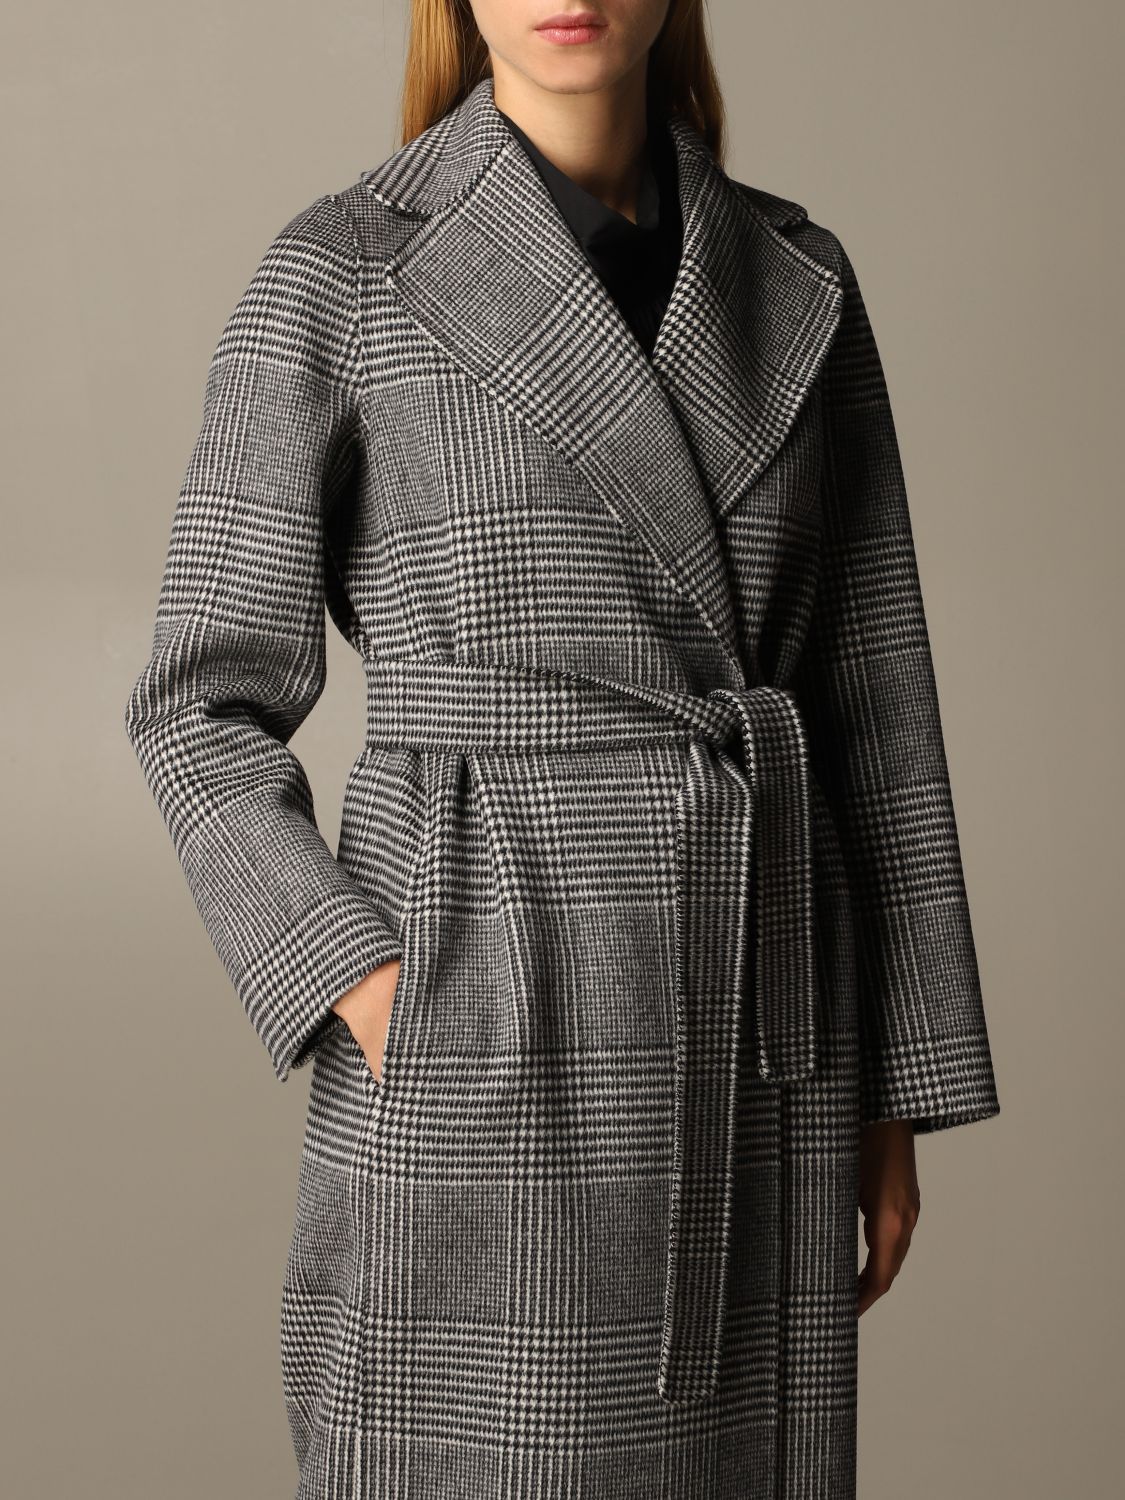 S MAX MARA: Fiorito coat in Prince of Wales wool | Coat S Max Mara ...